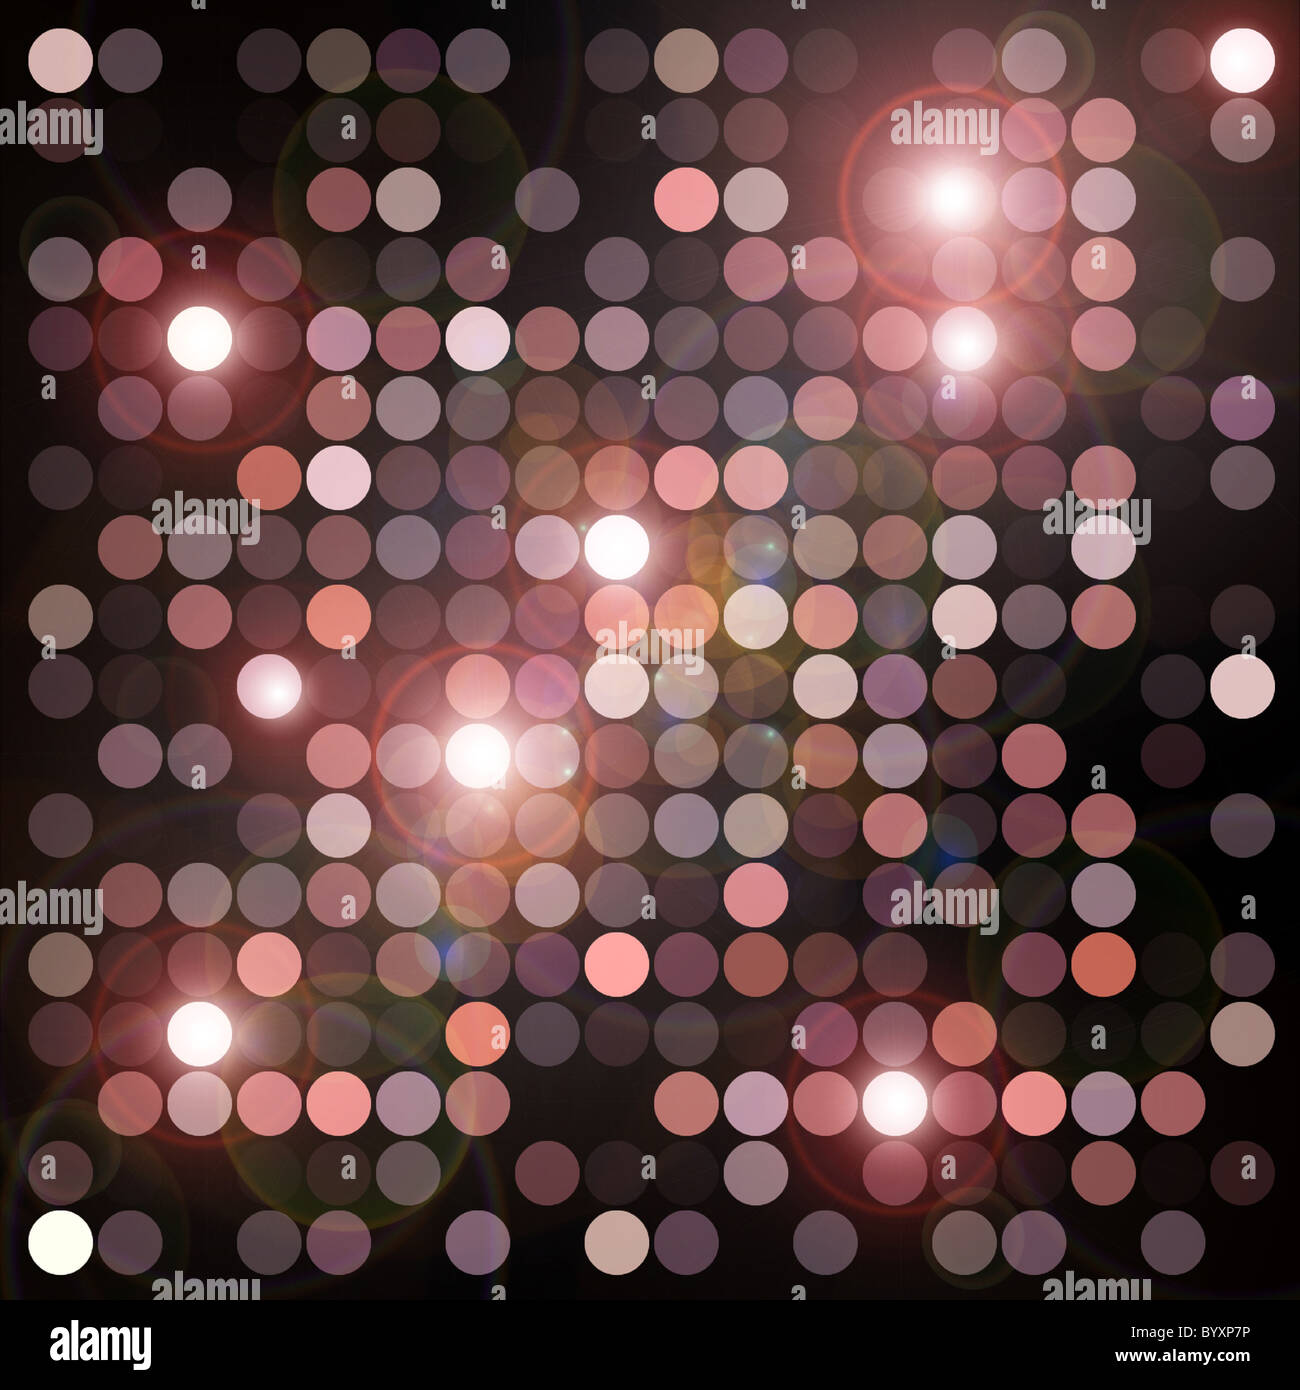 Circles geometric pattern and flashing lights background. Abstract digital illustration. Stock Photo